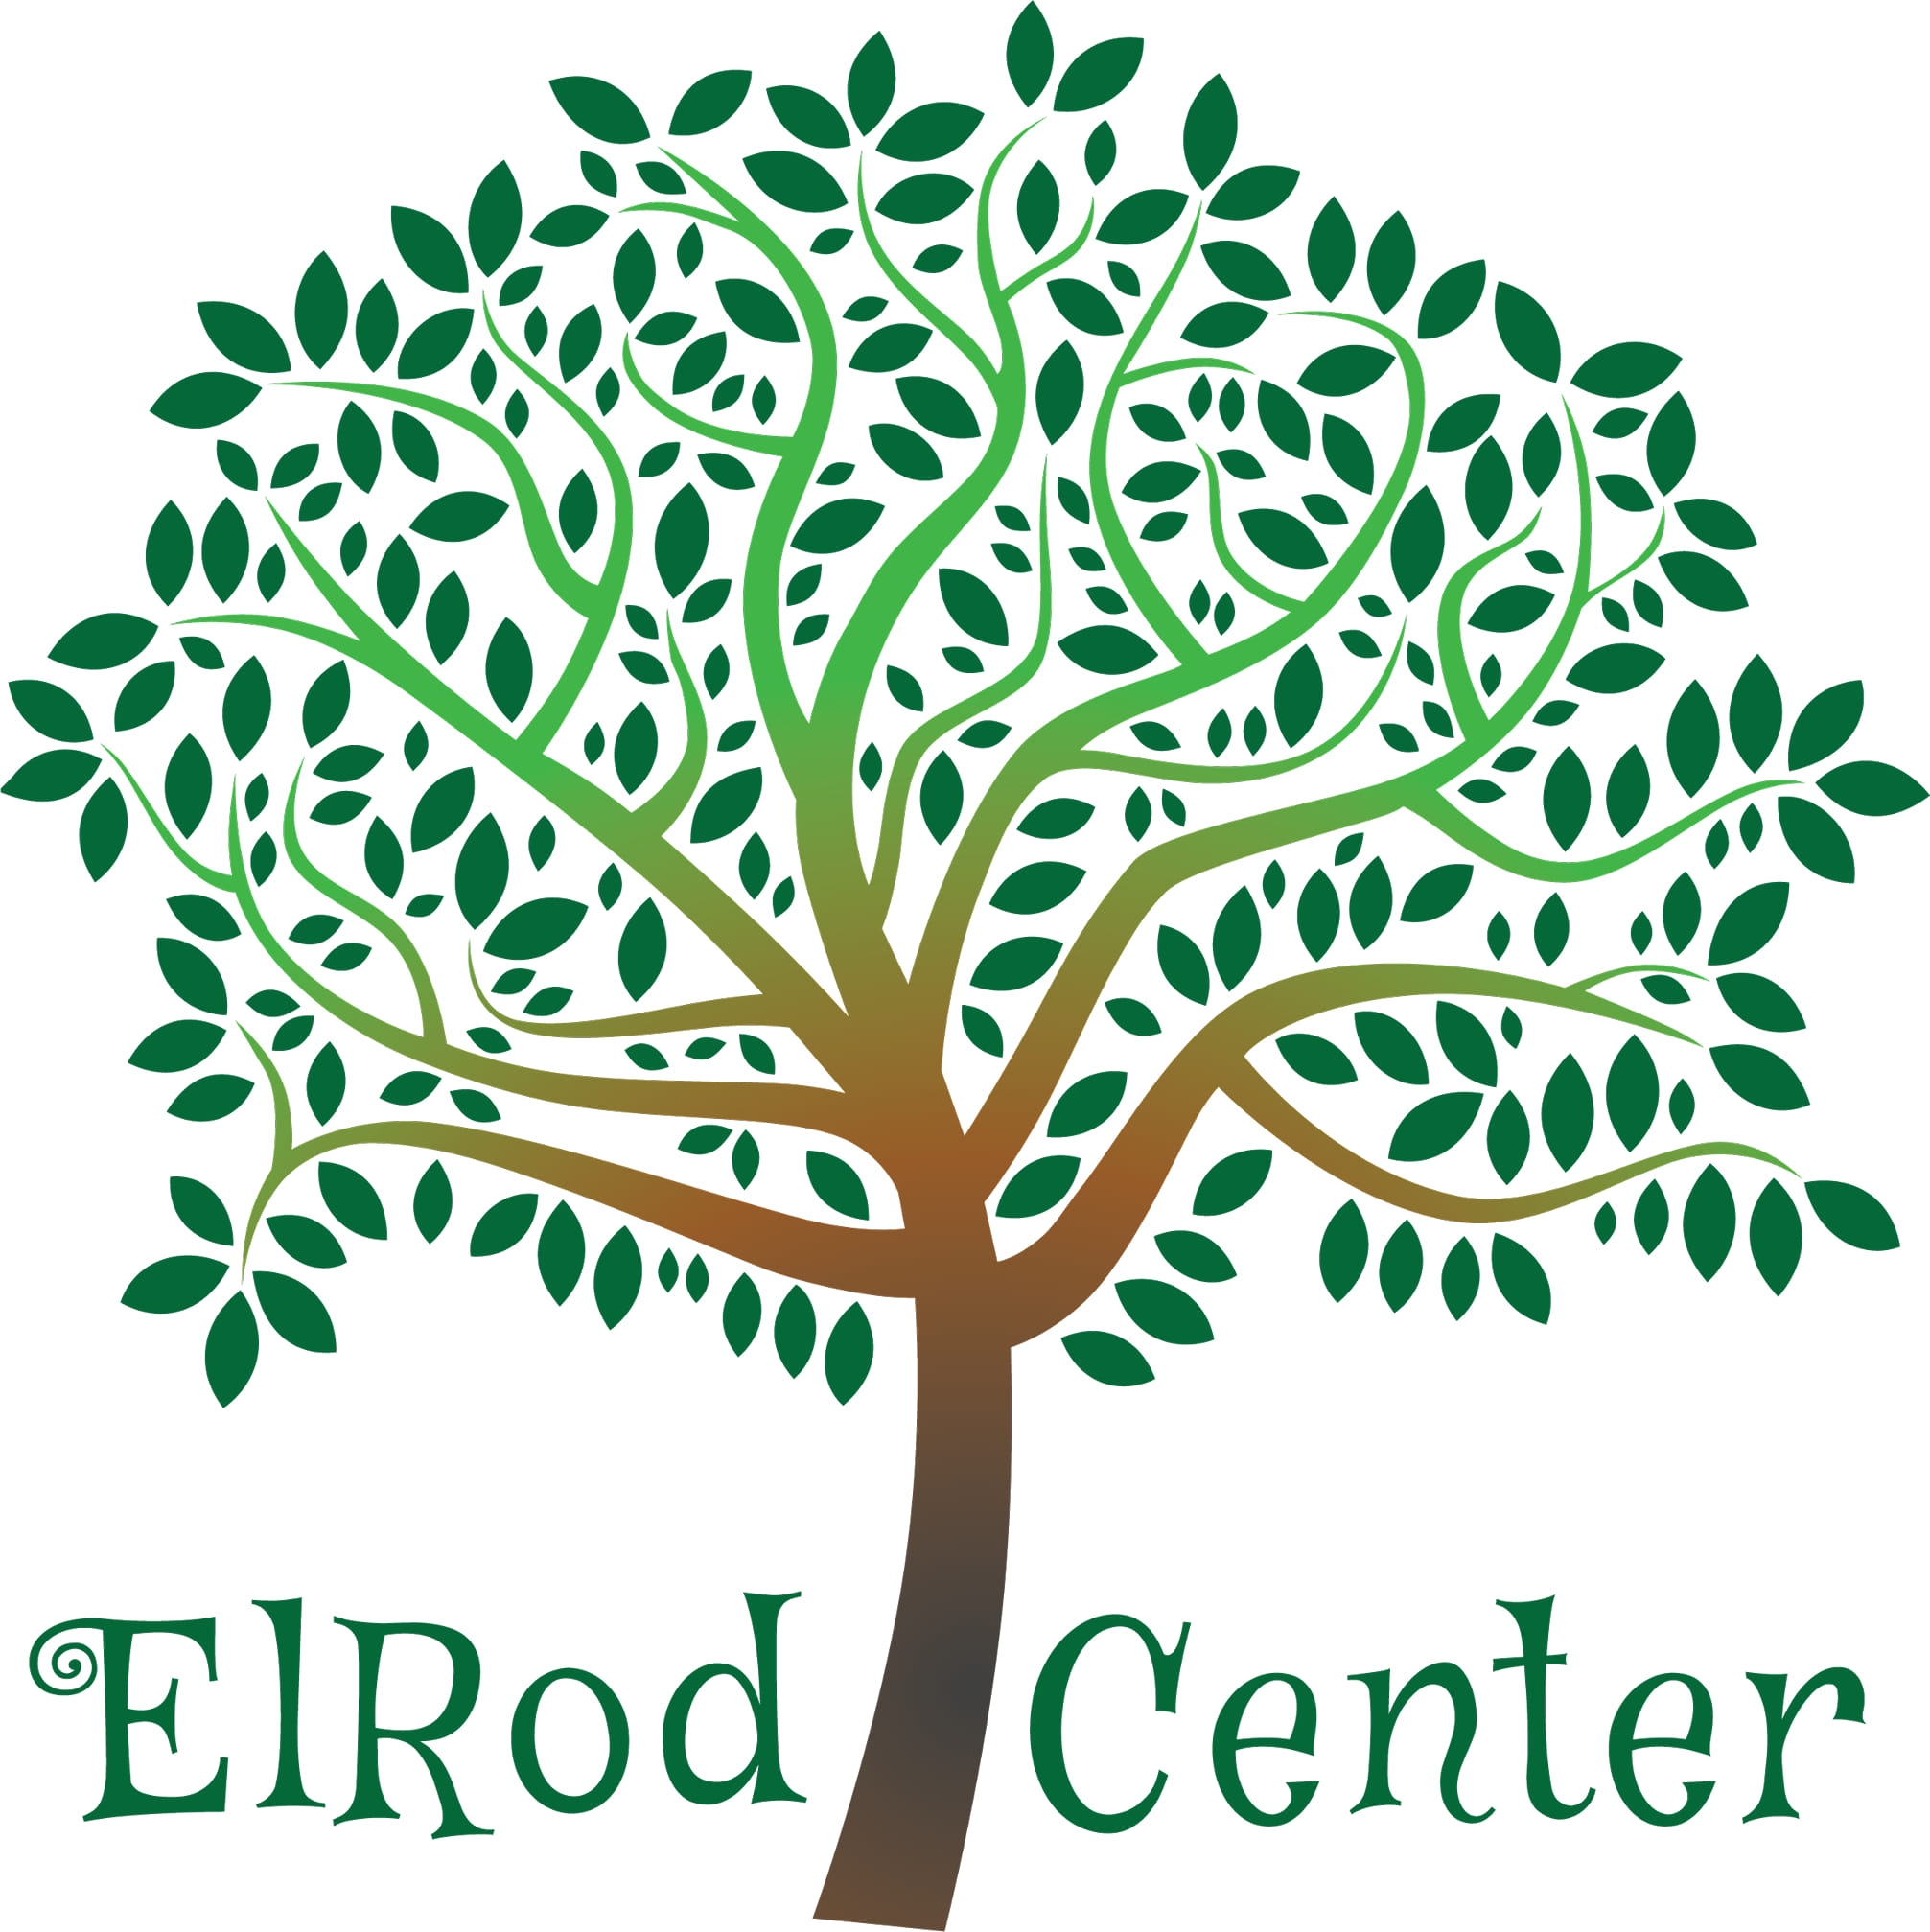 ElRod Center logo